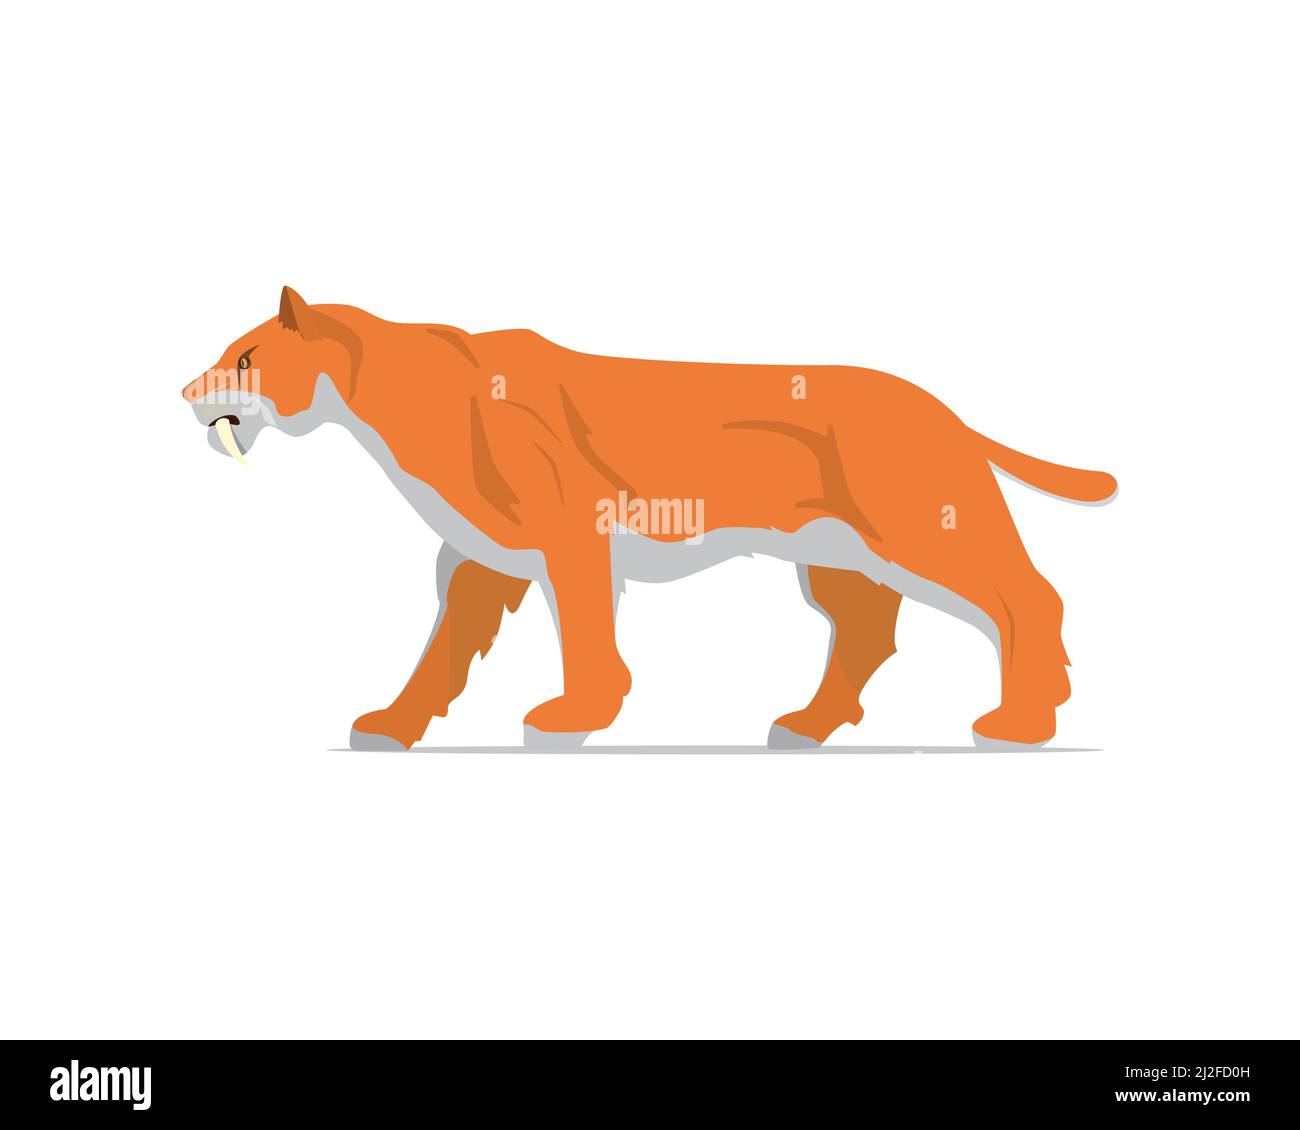 Detailed Saber-Toothed Tiger Illustration Vector Stock Vector